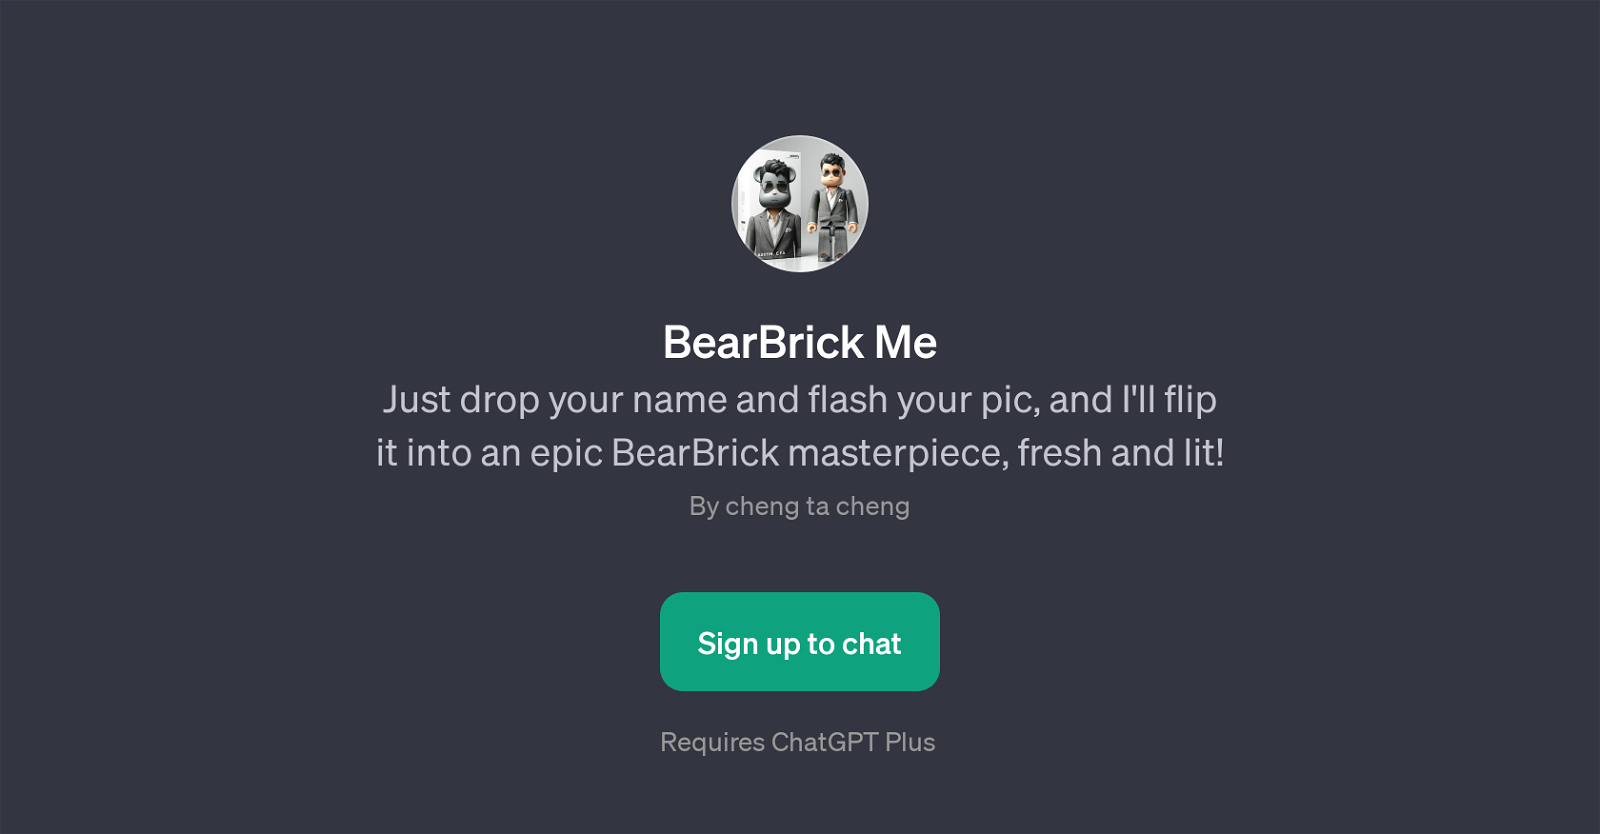 BearBrick Me website